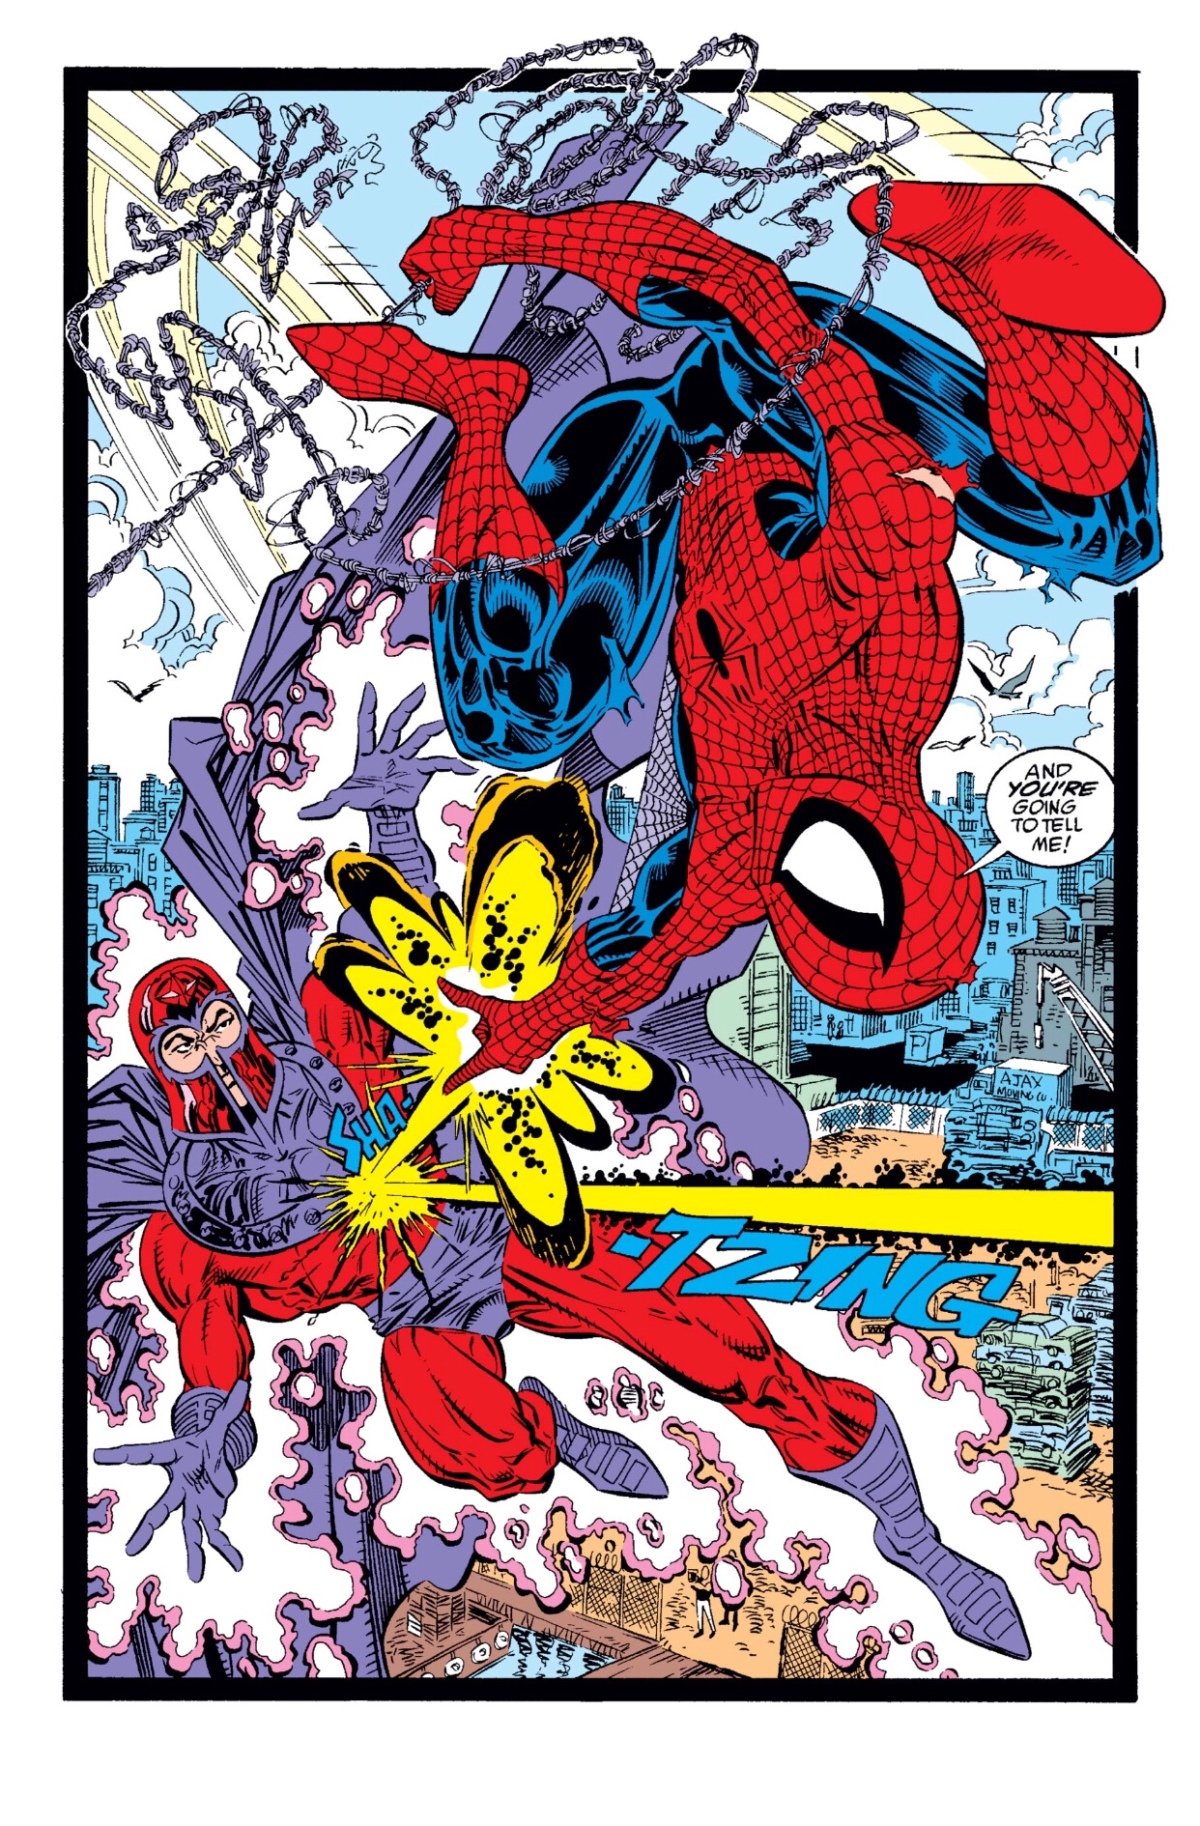 Cosmic Powered Amazing Spider-Man vs. Magneto (The Amazing Spider-Man #327, 1989)